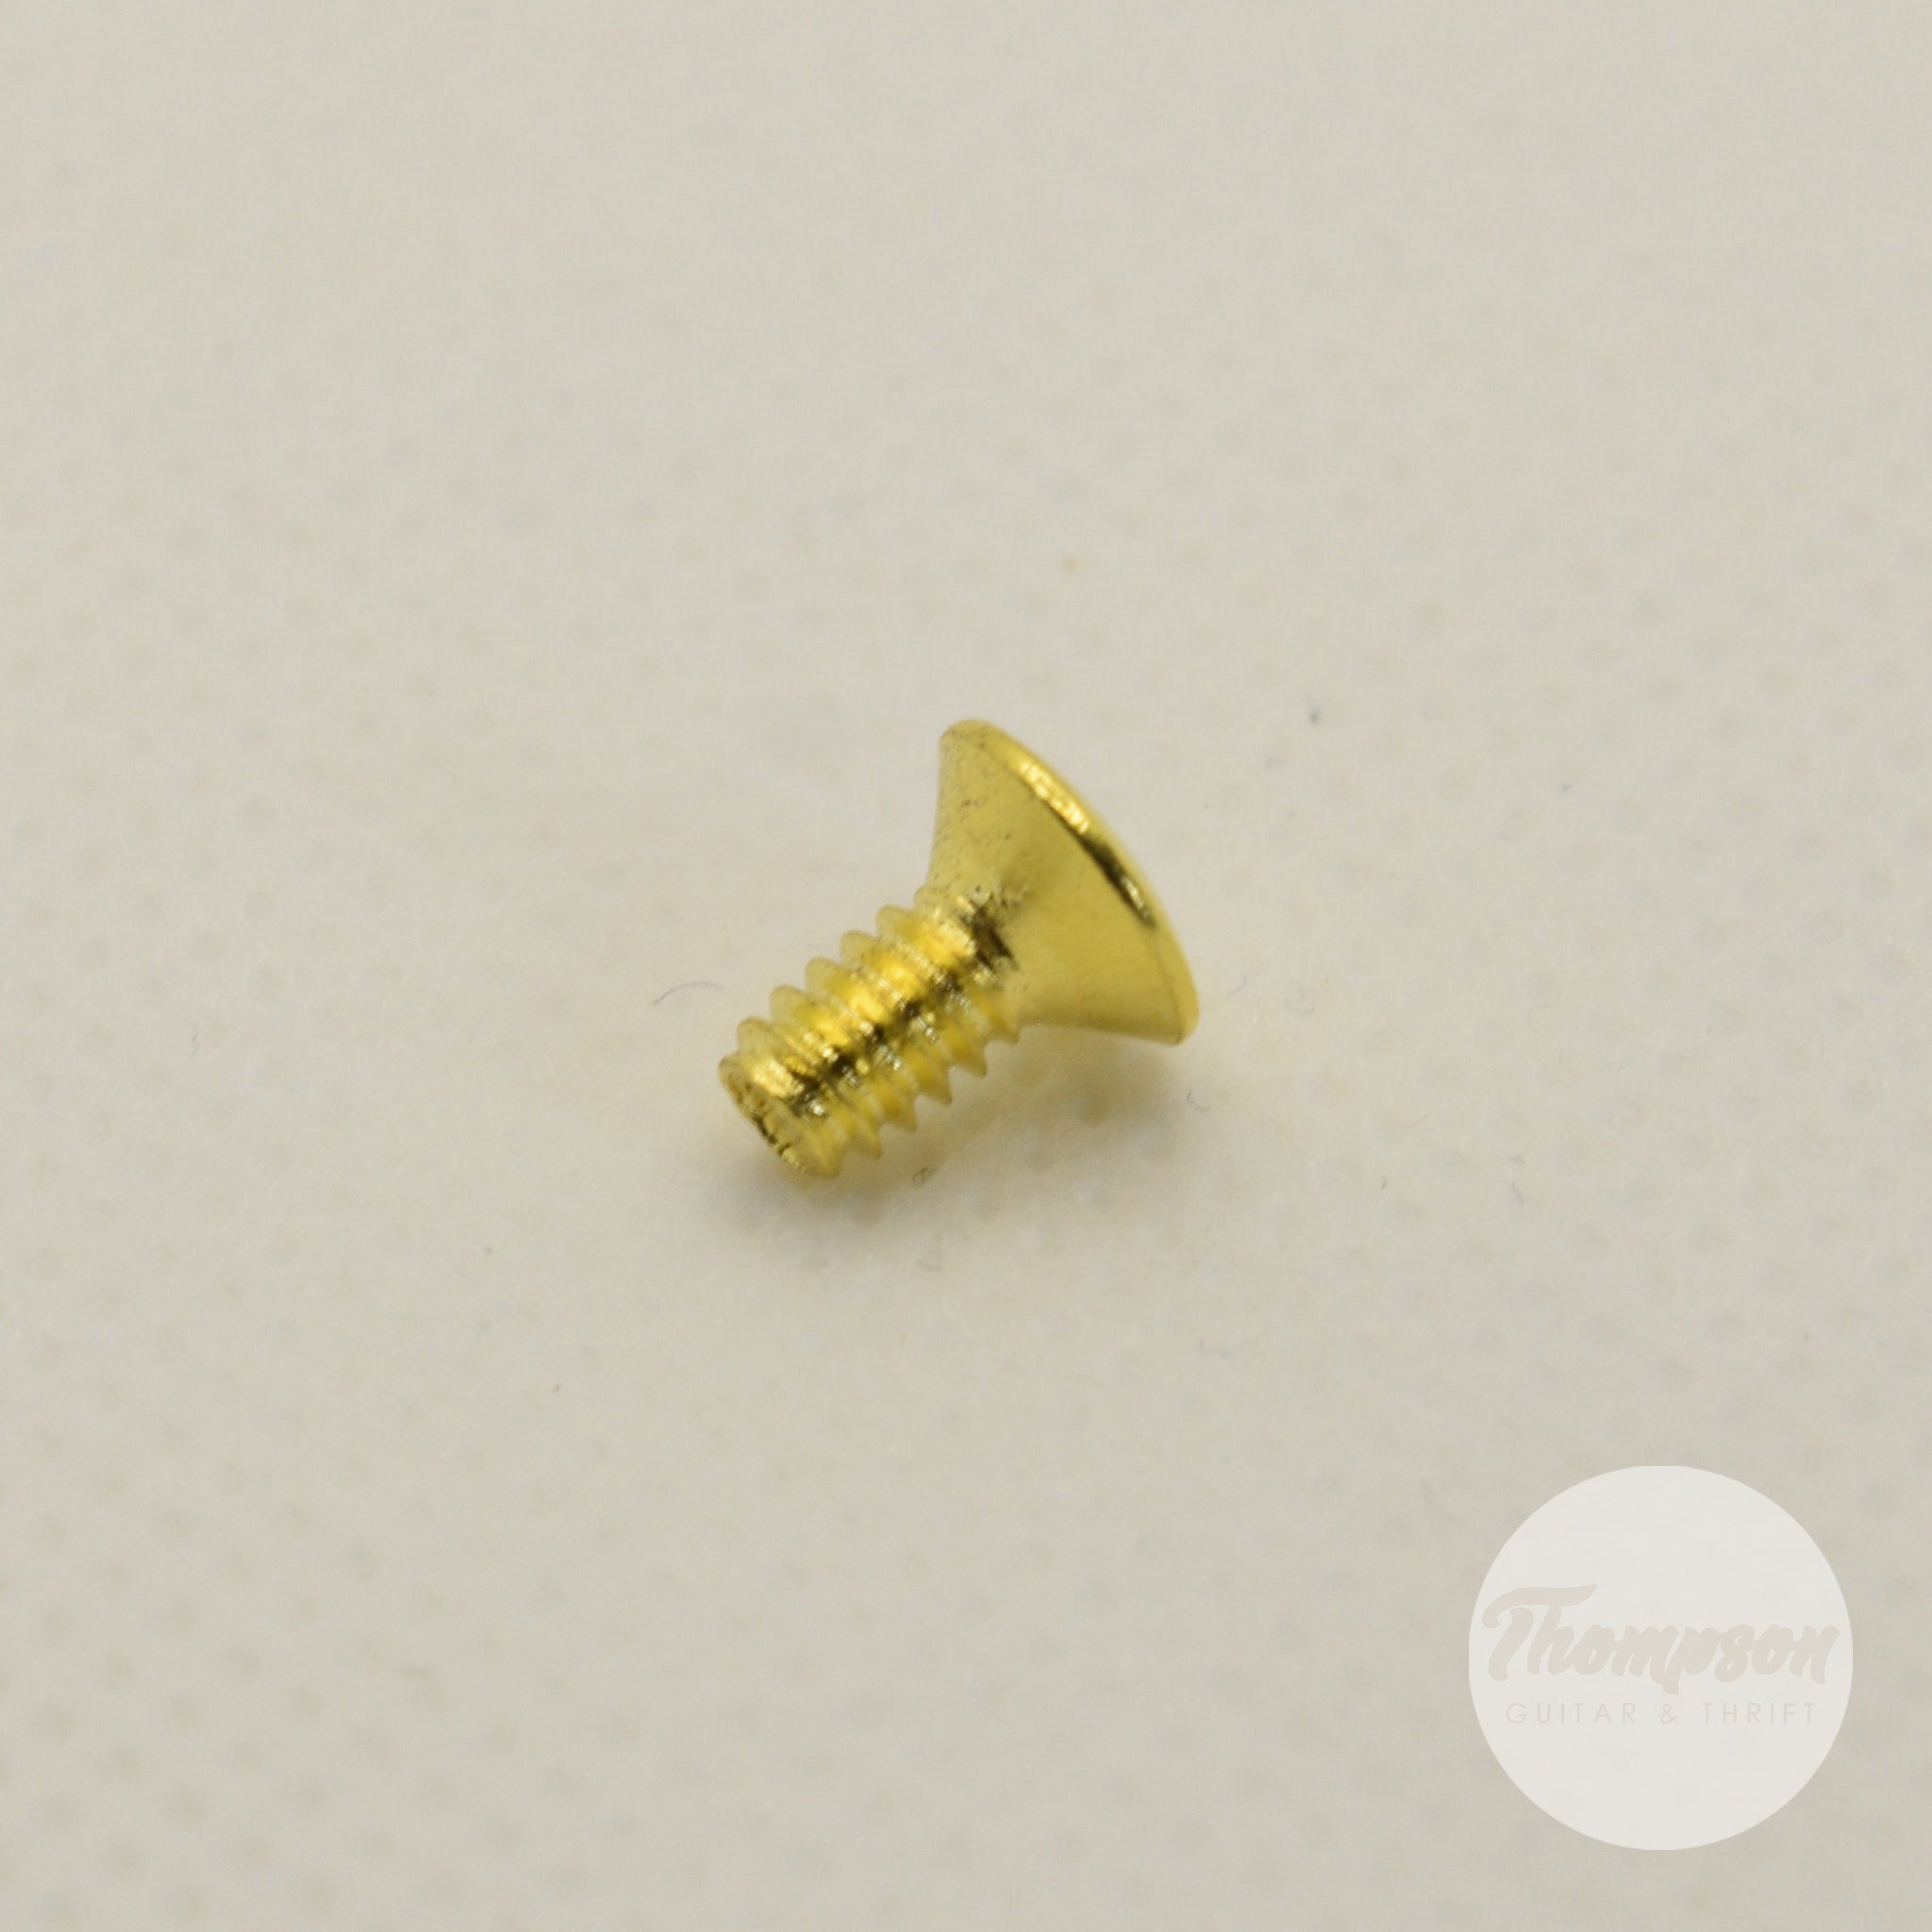 Gold Steel Switch Screws 3.5mm x 5mm